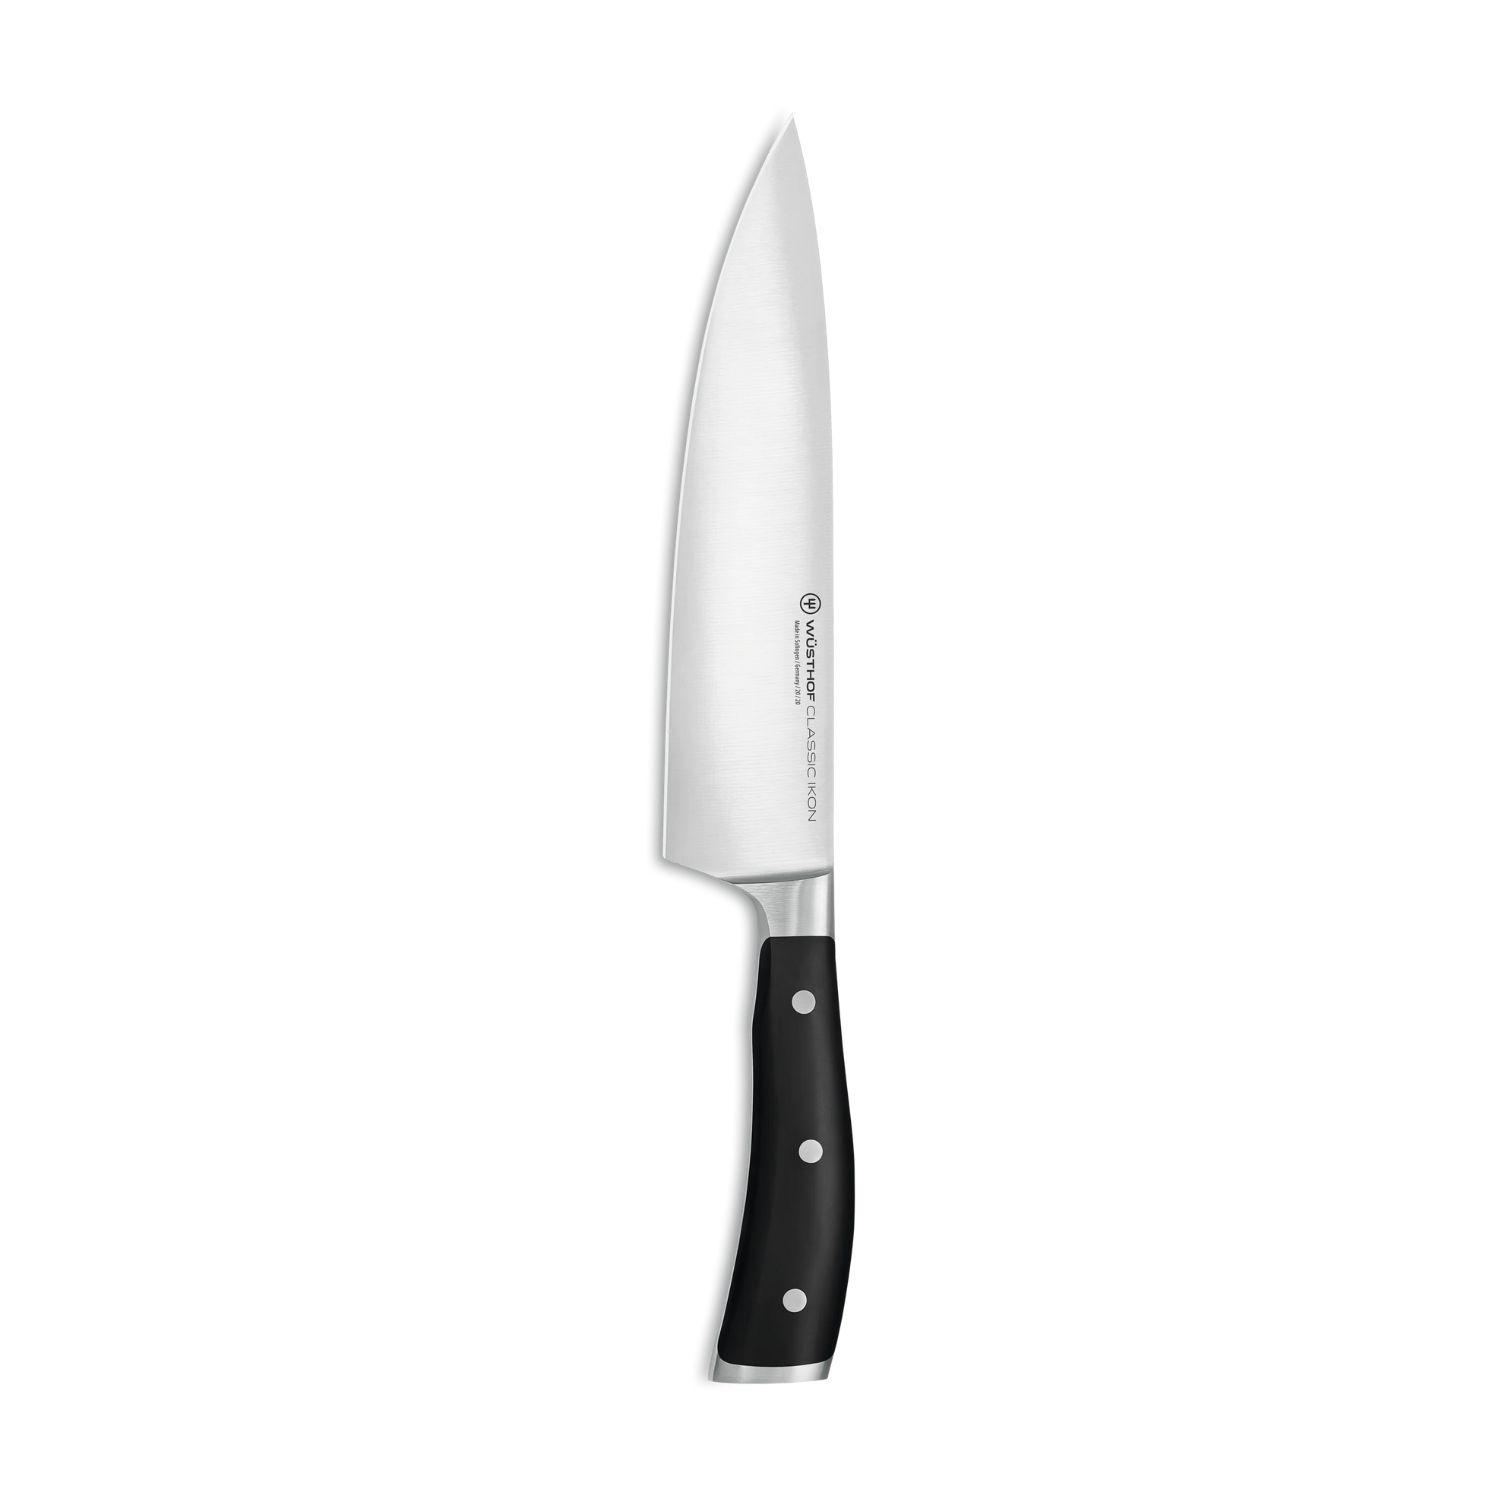 Wusthof Classic Ikon Chefs Knife 20cm